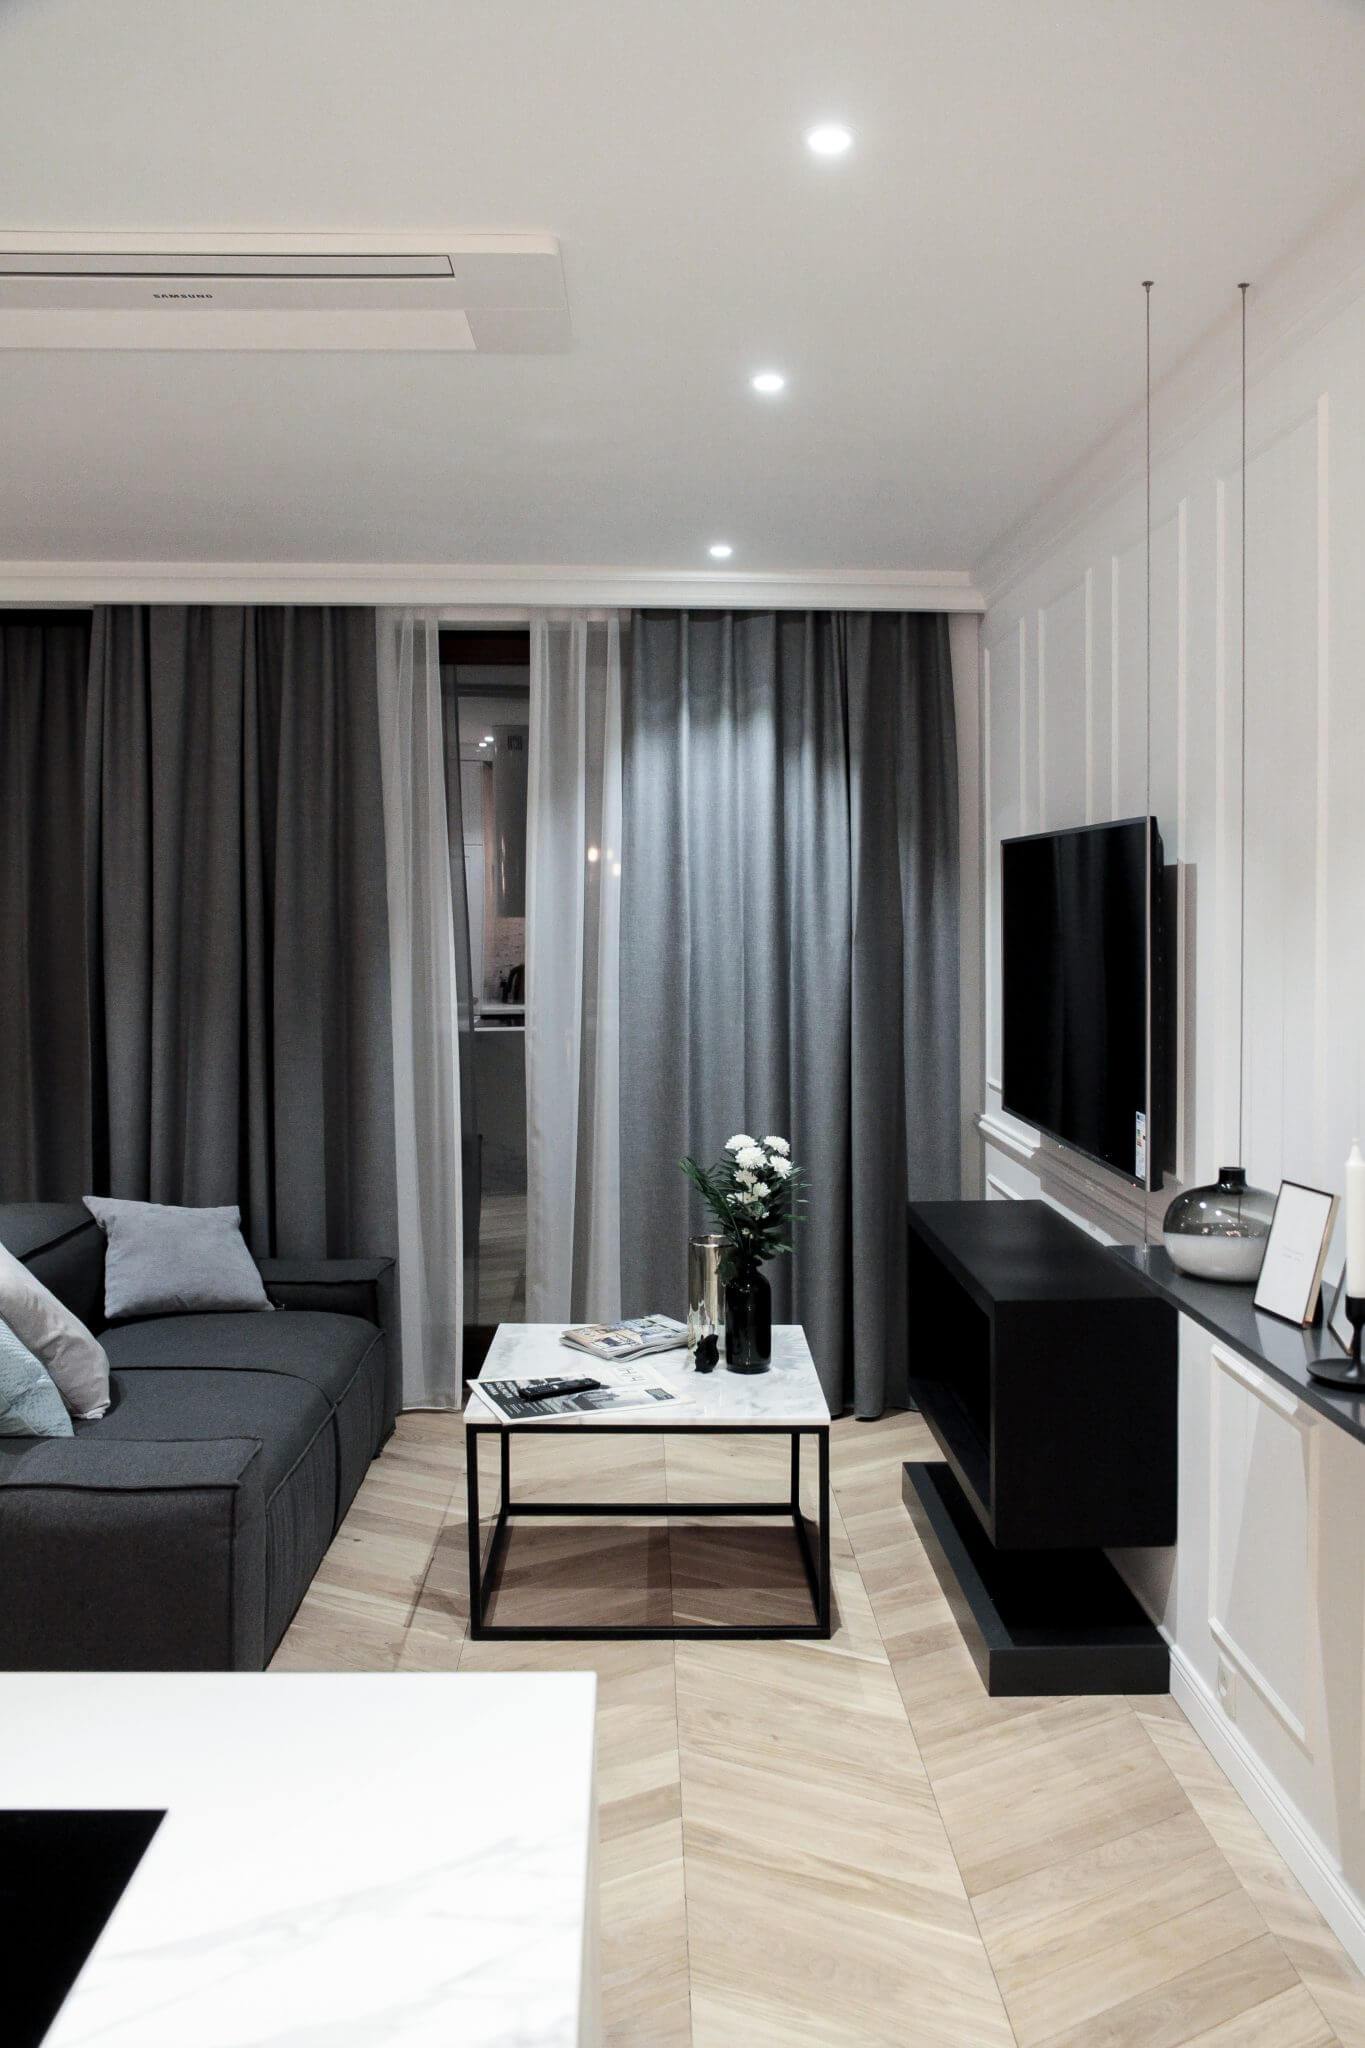 QL026 - Curtain Profile in a room with a dark colour scheme